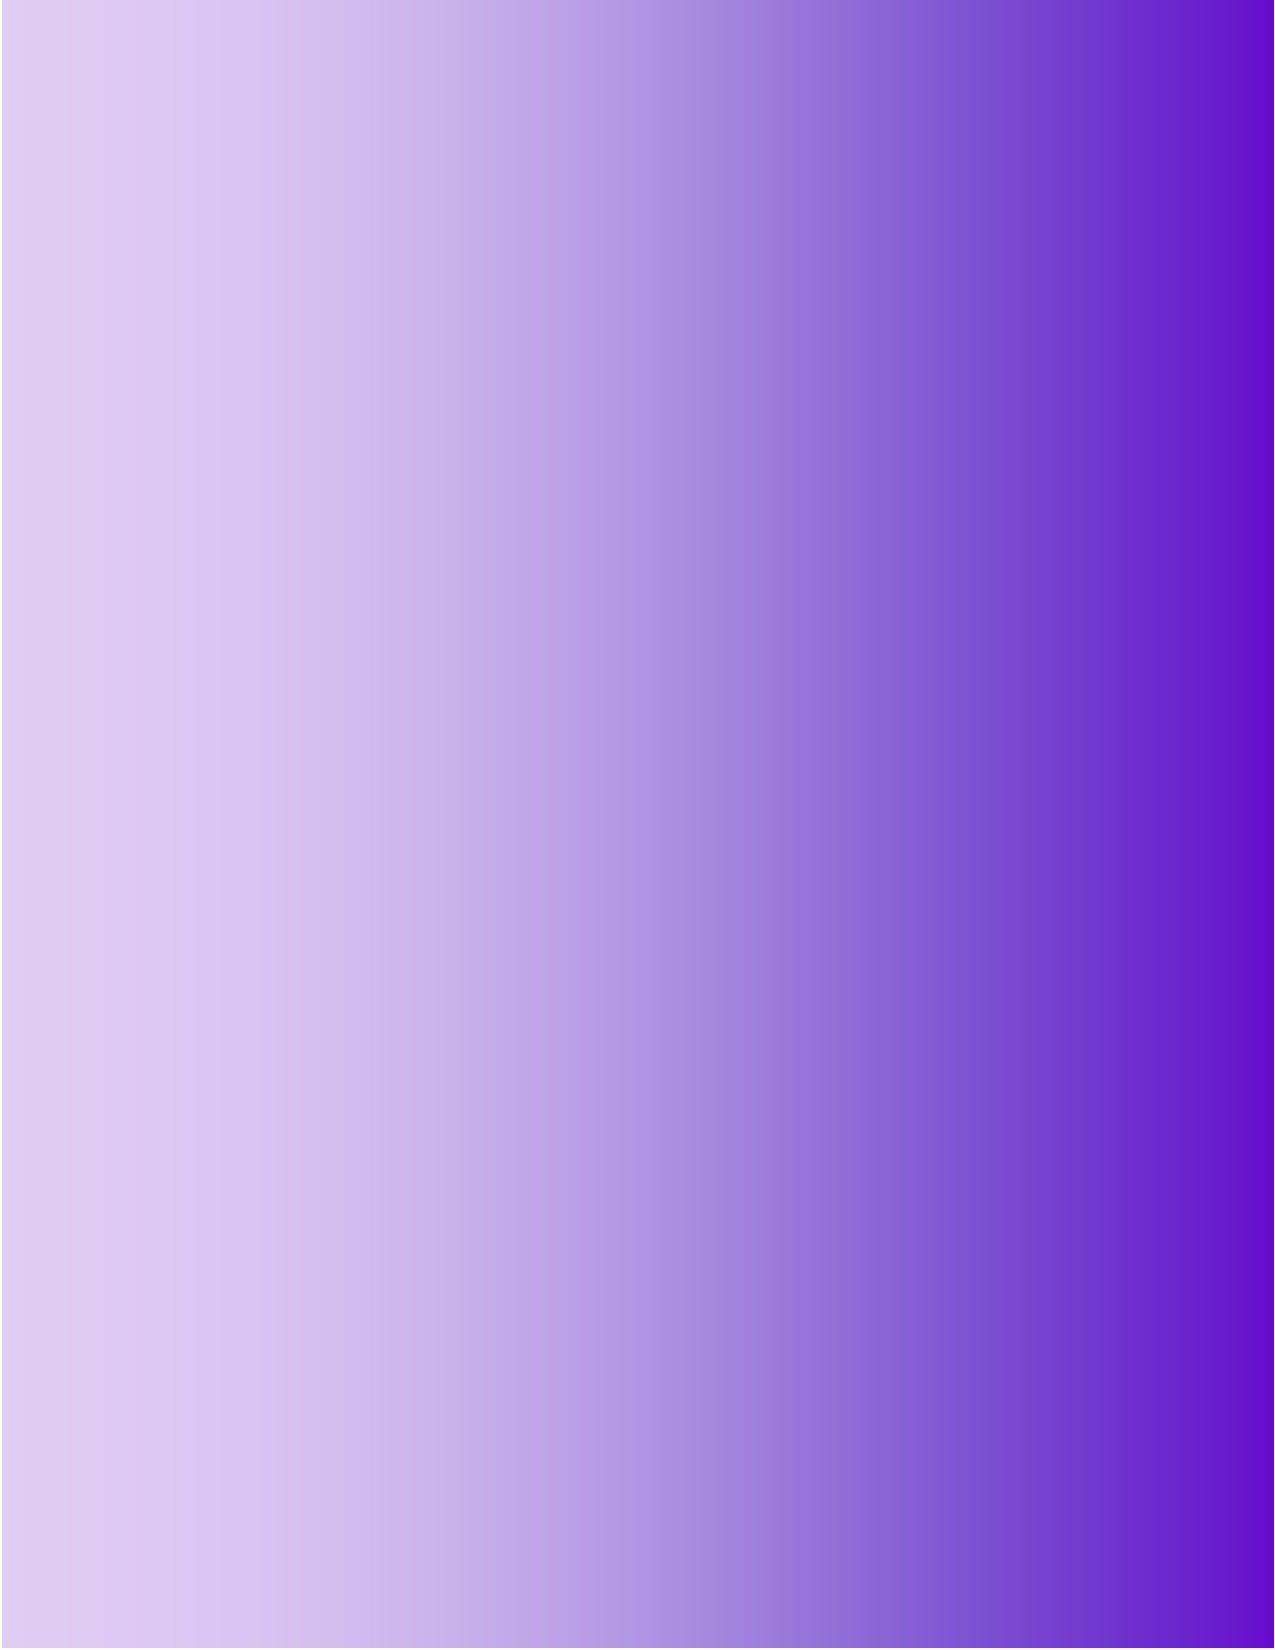 Organizational Chart - Purple Right.jpg